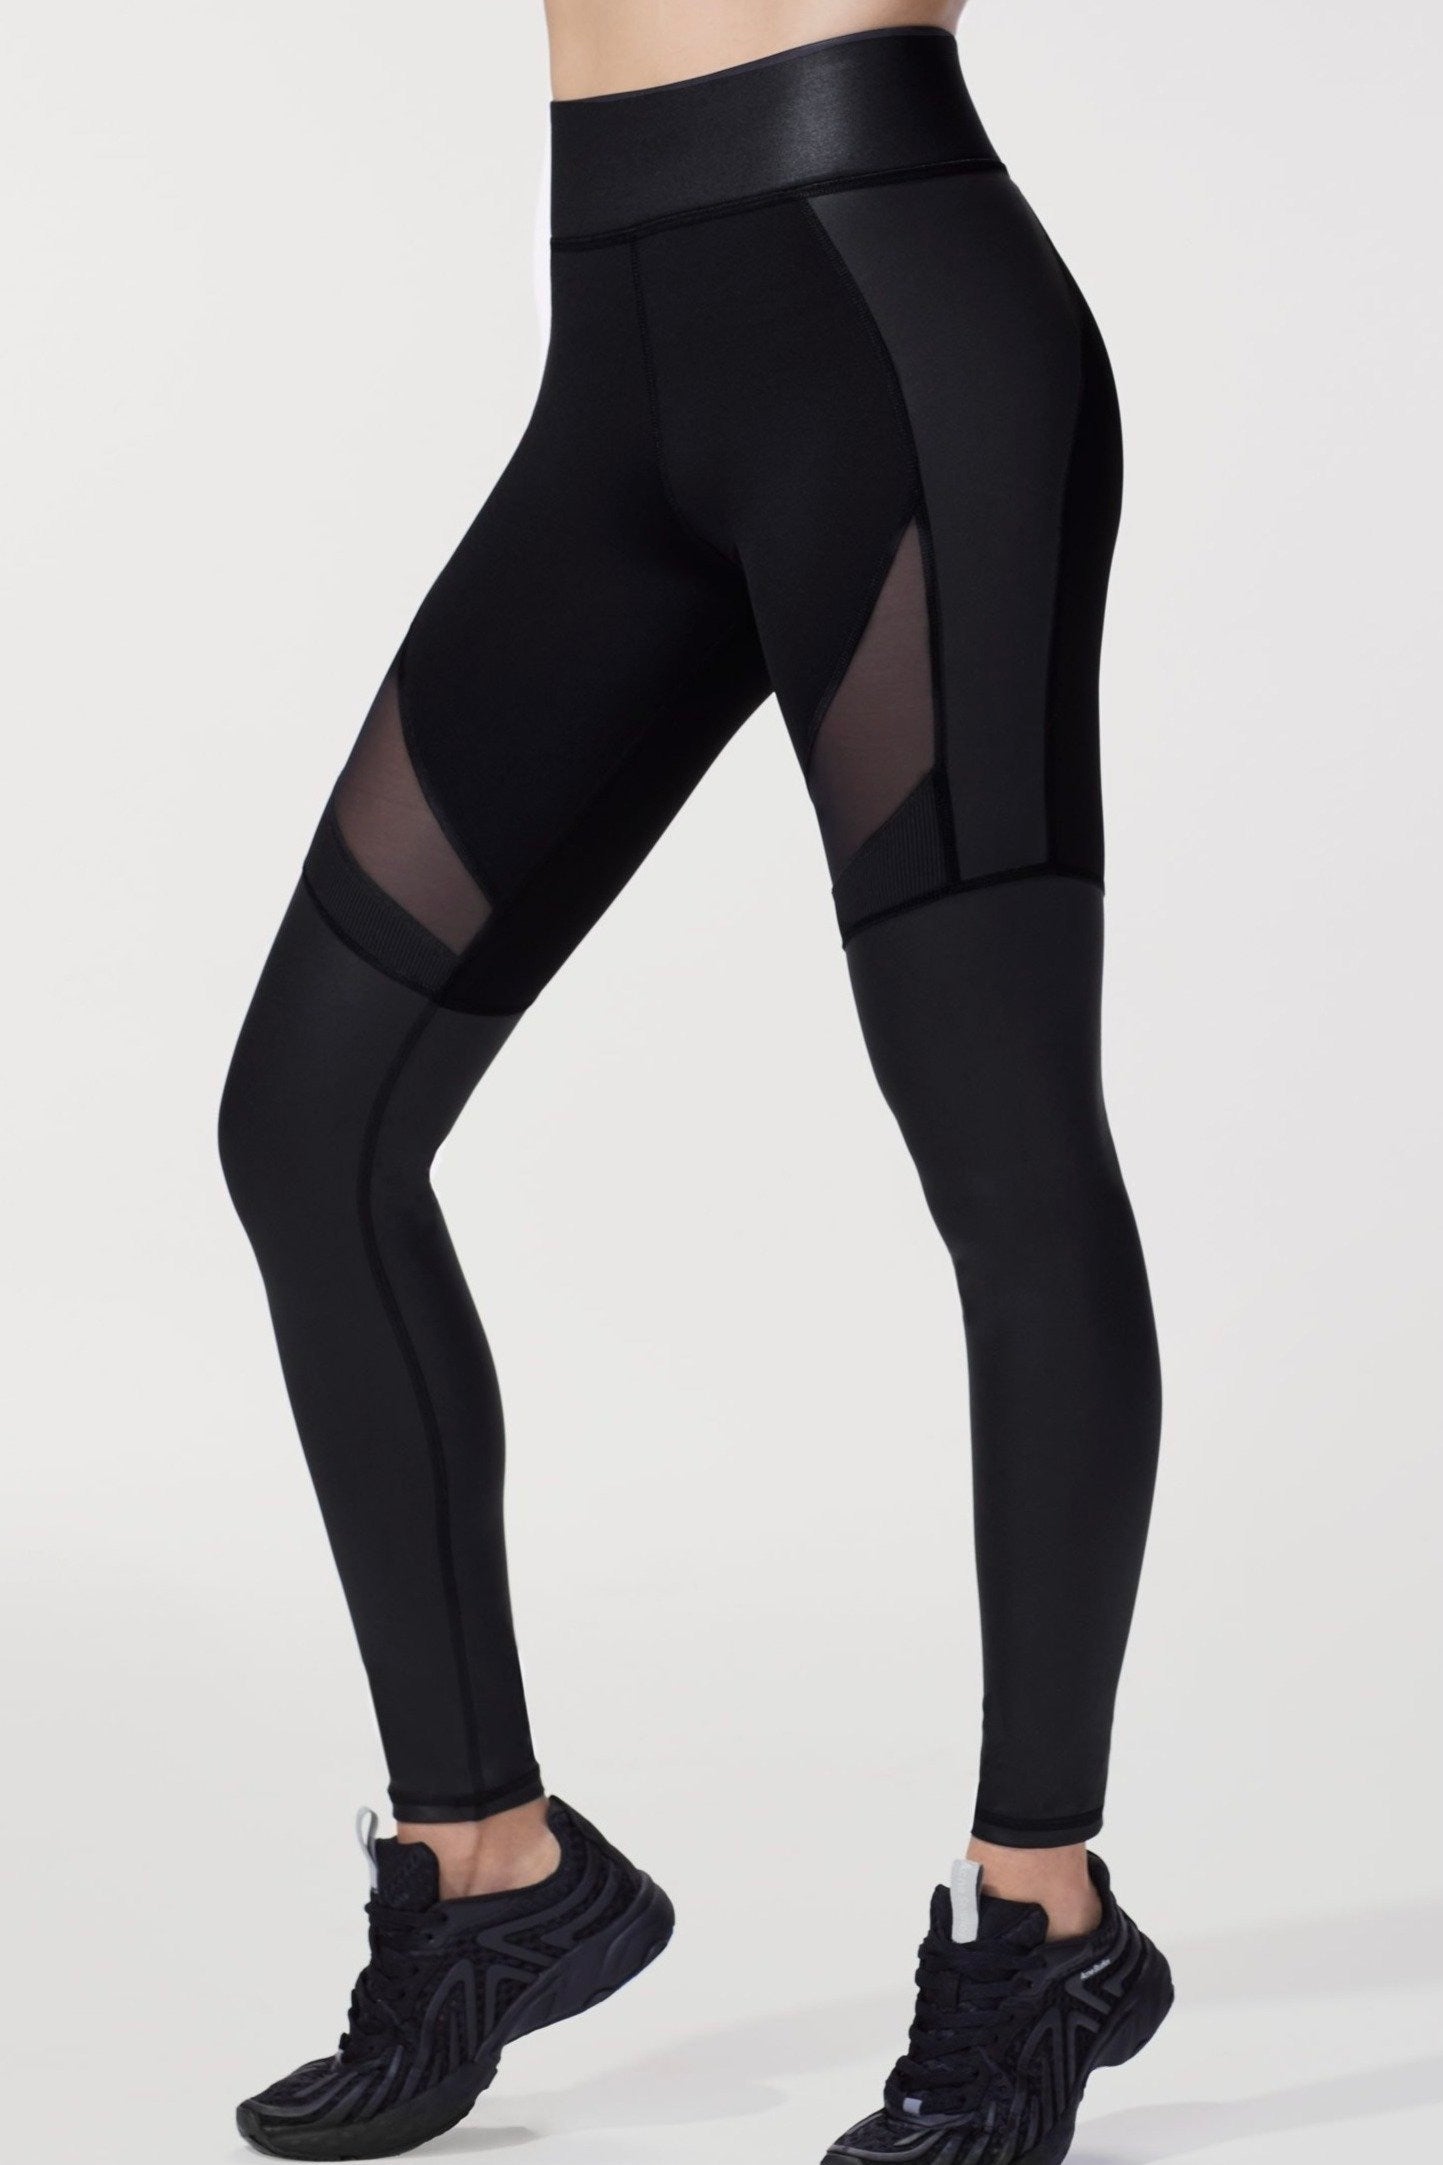 What are black mesh paneled workout leggings? - Quora